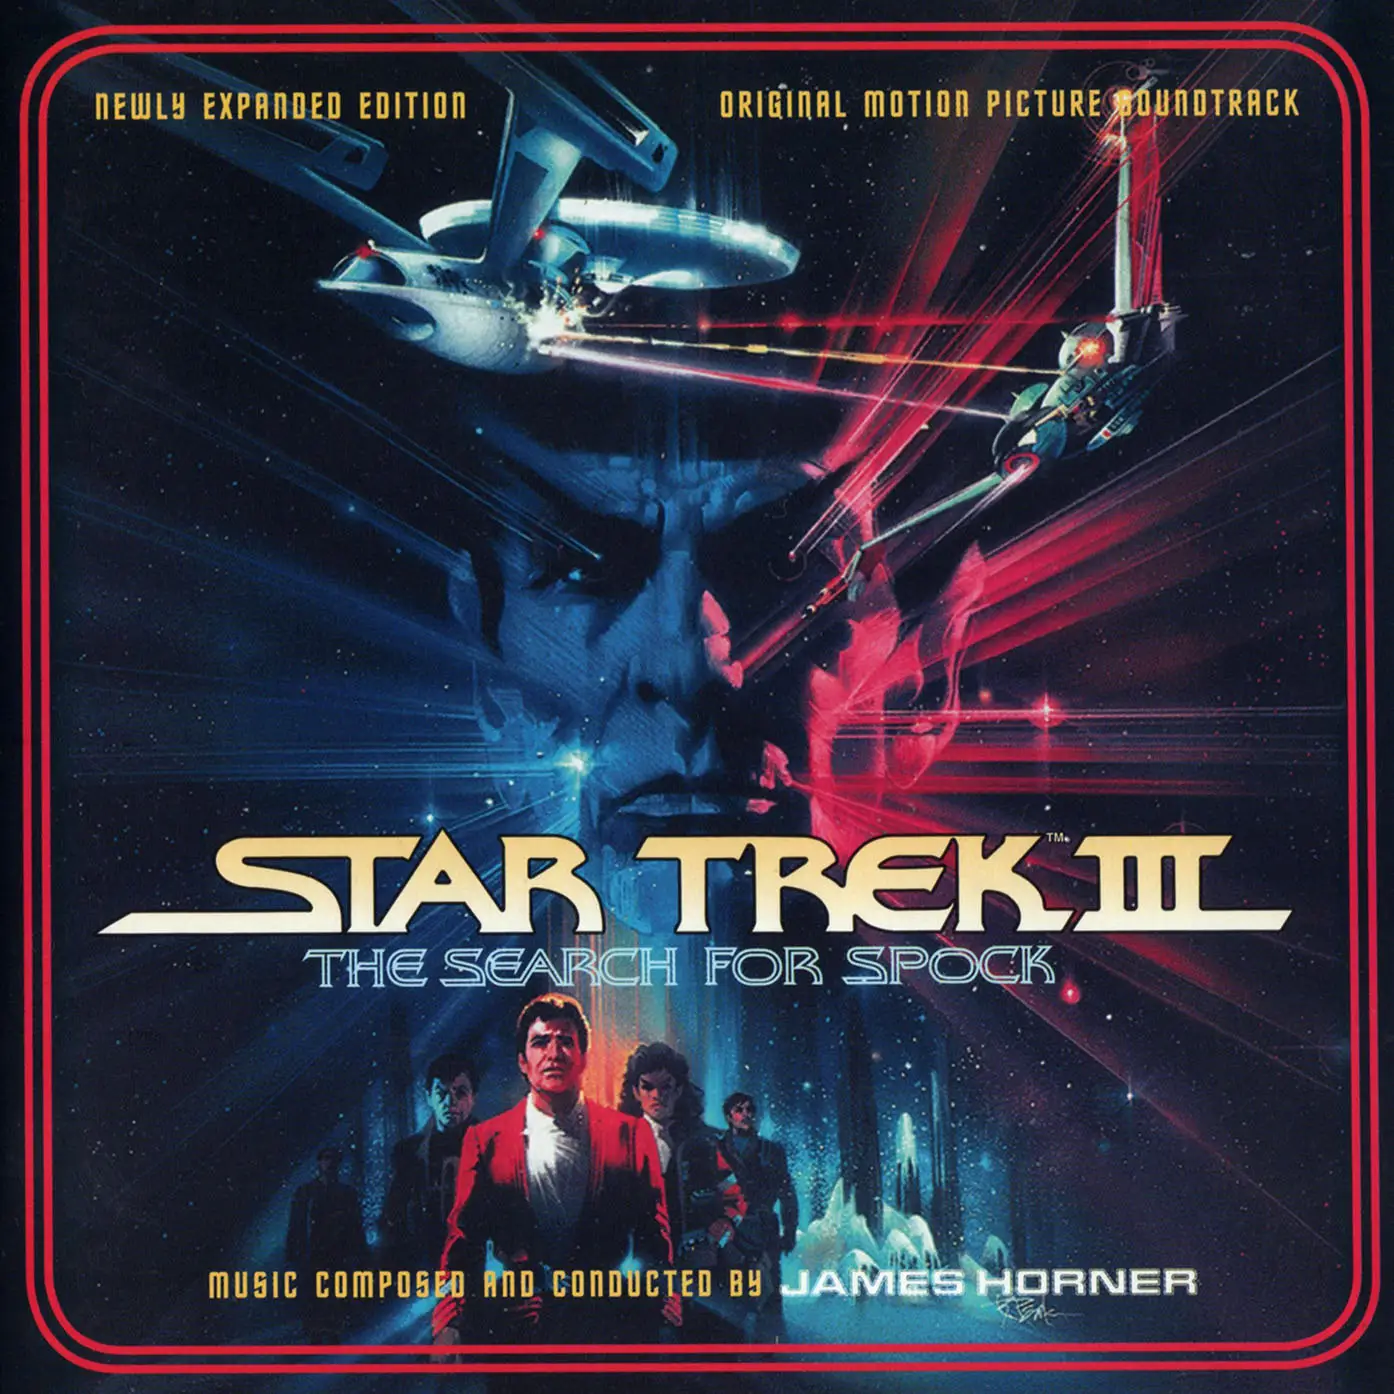 star trek 3 soundtrack download